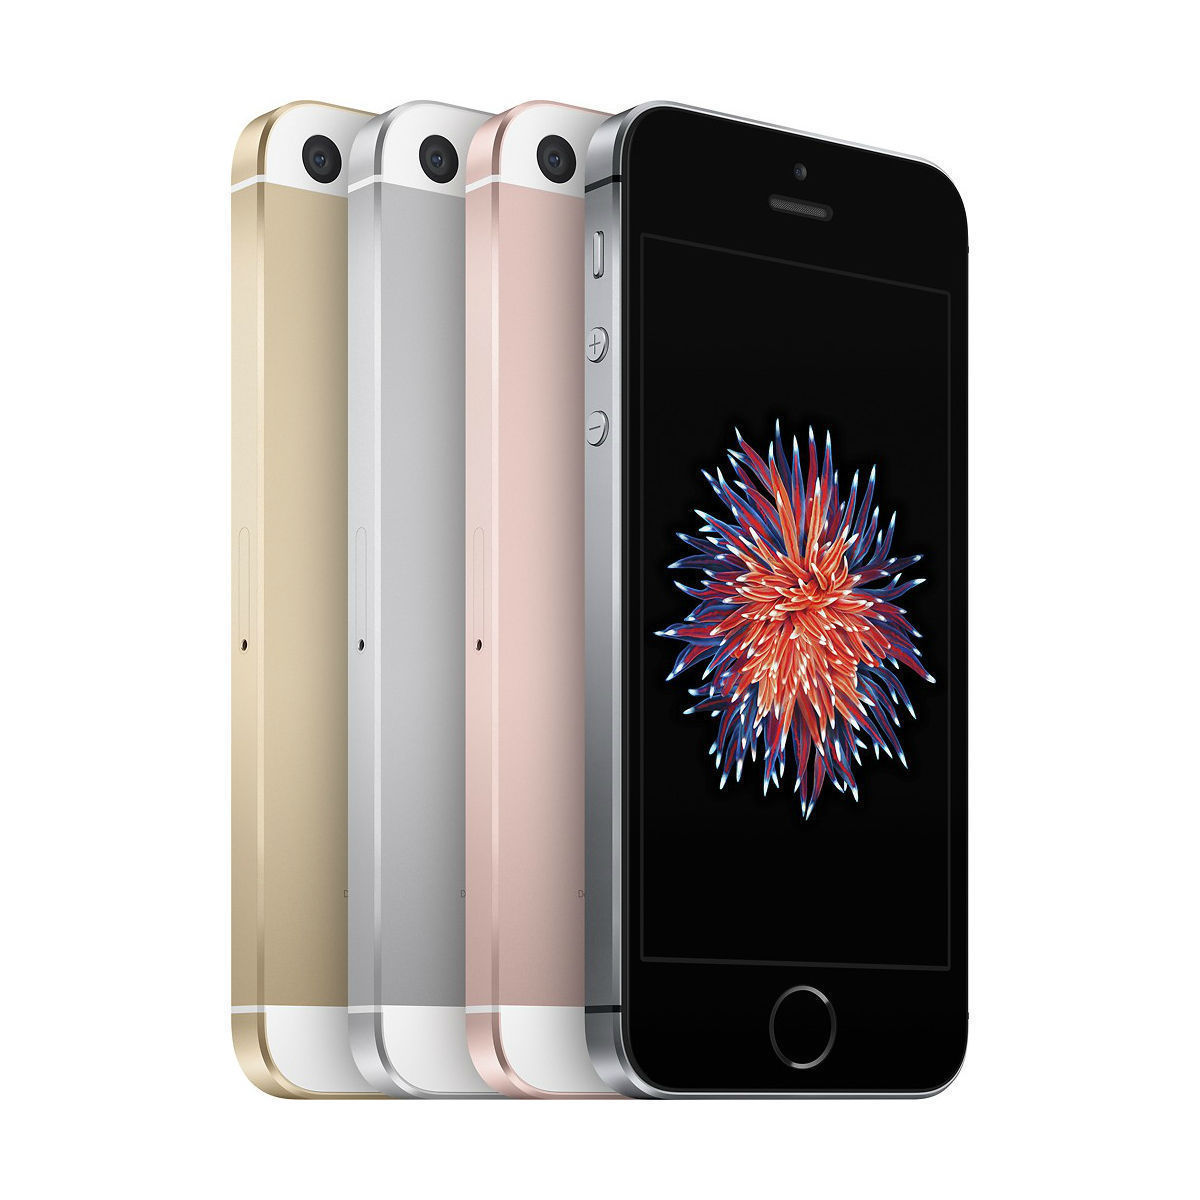 Refurbished unlocked Apple iPhone SE 64GB GSM smartphone for $210